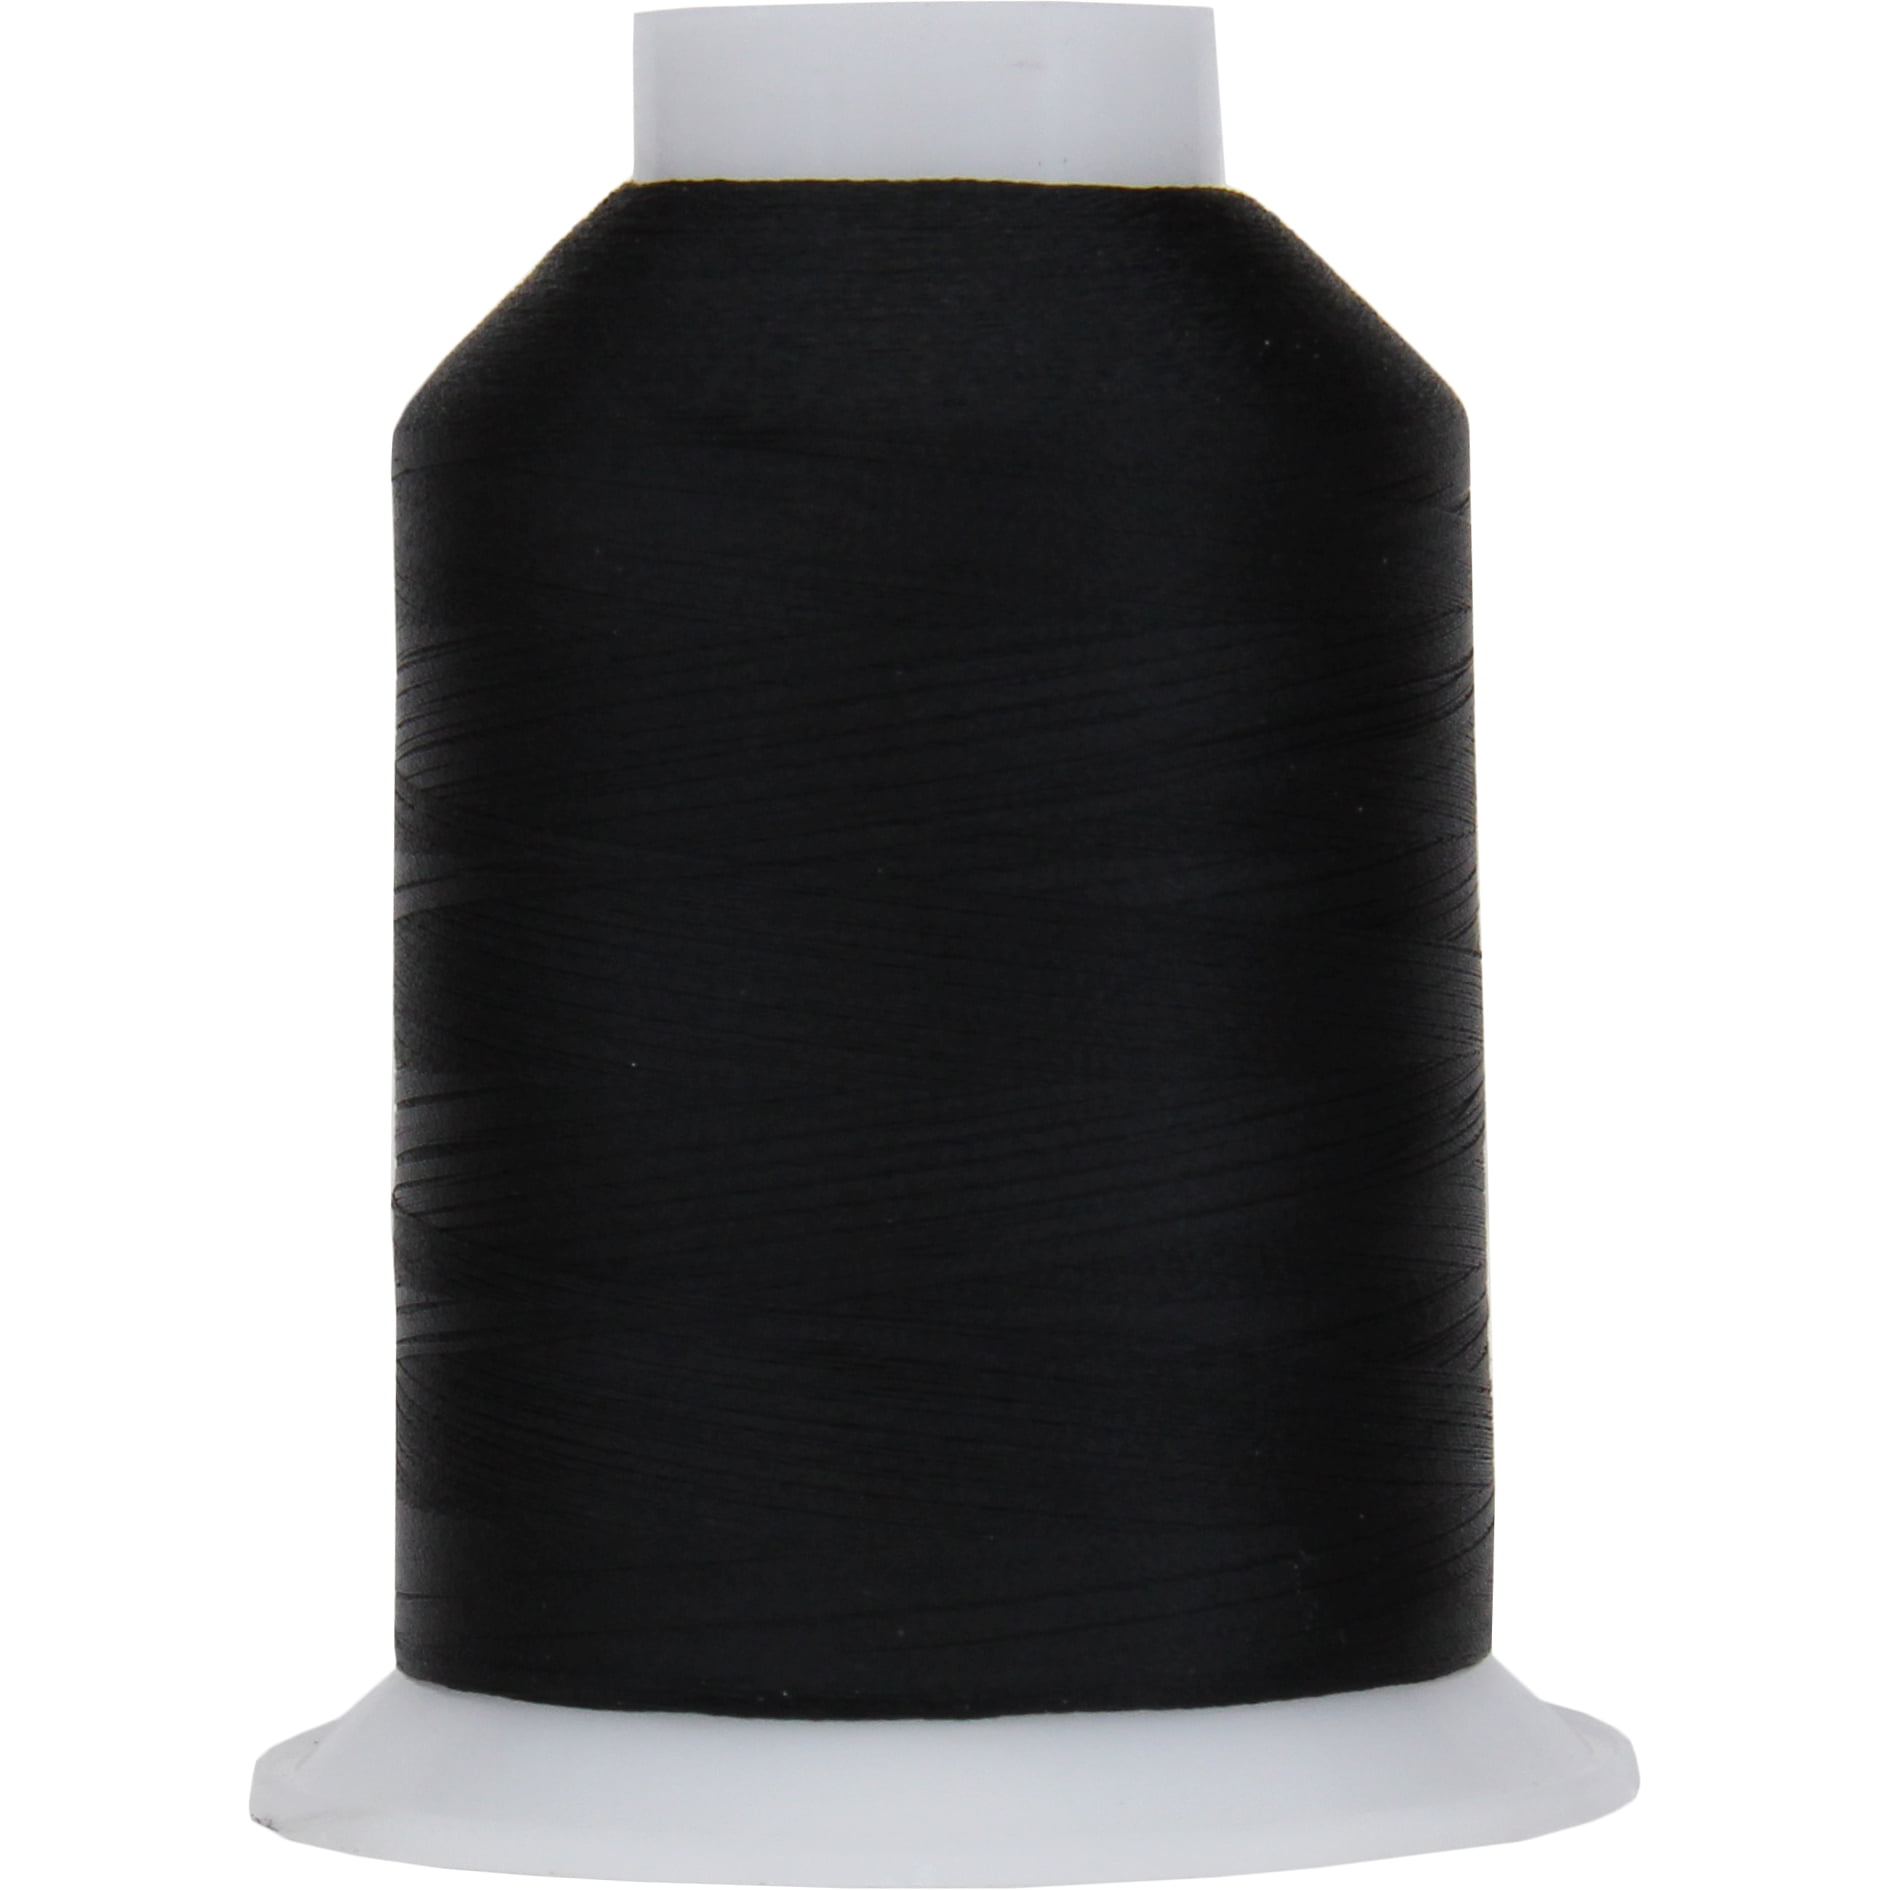  Threadart Polyester Machine Embroidery Bobbin Thread - 60wt  White - 5000m Spools : Arts, Crafts & Sewing